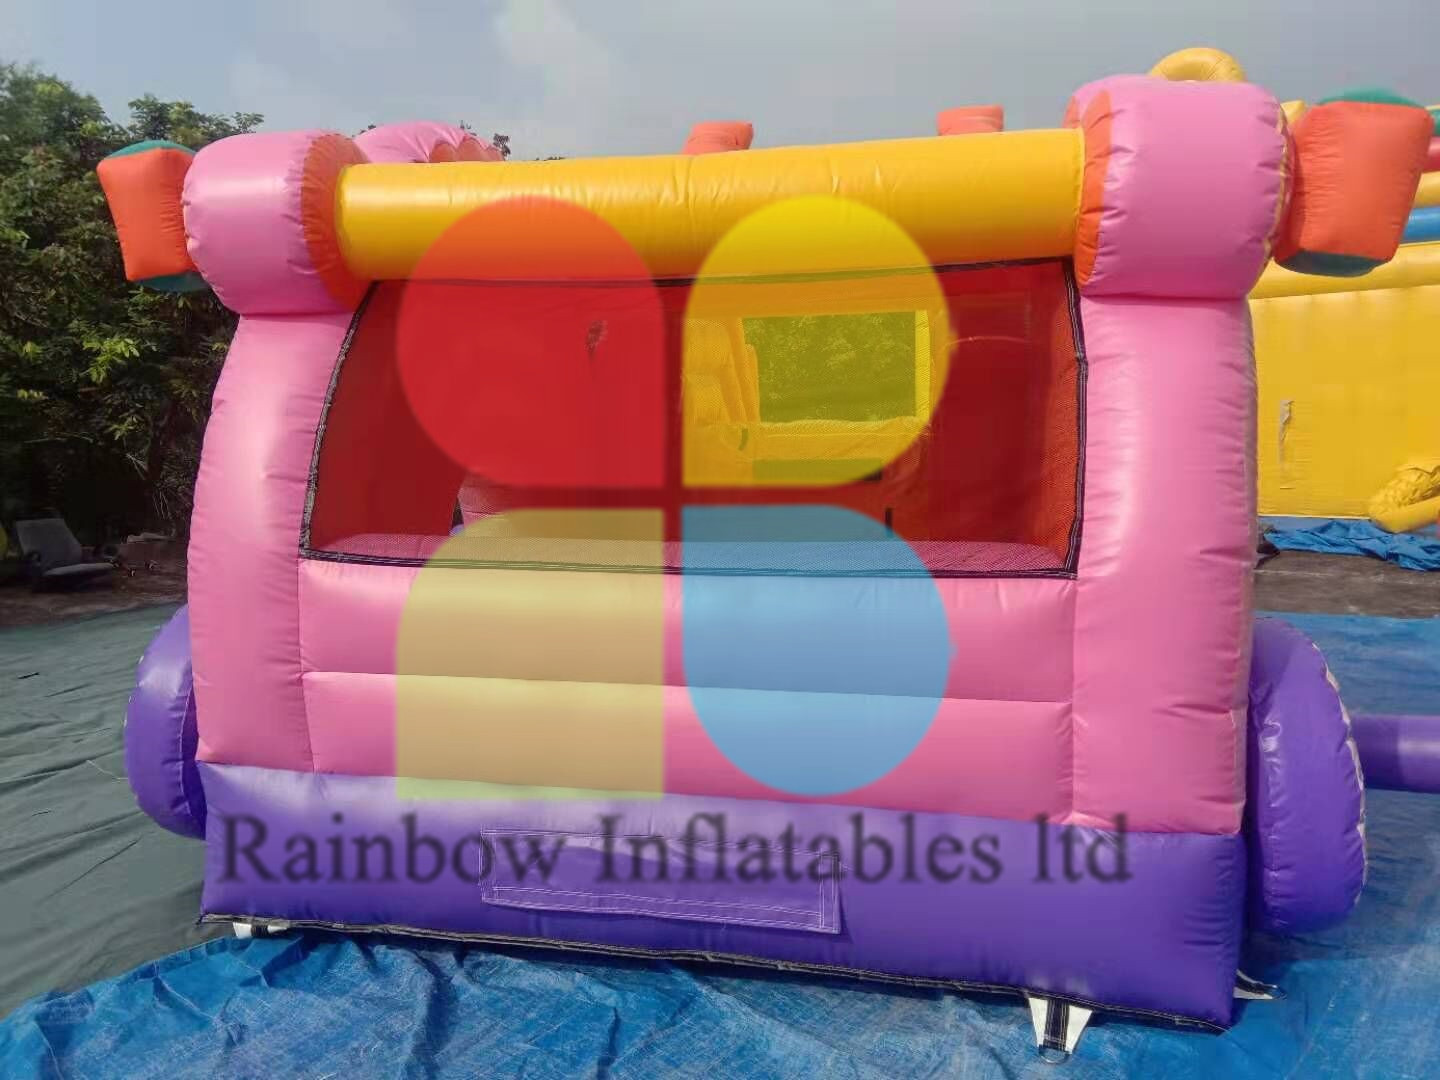 nimal Inflatable Unicorn Bouncer with Slide For Kids